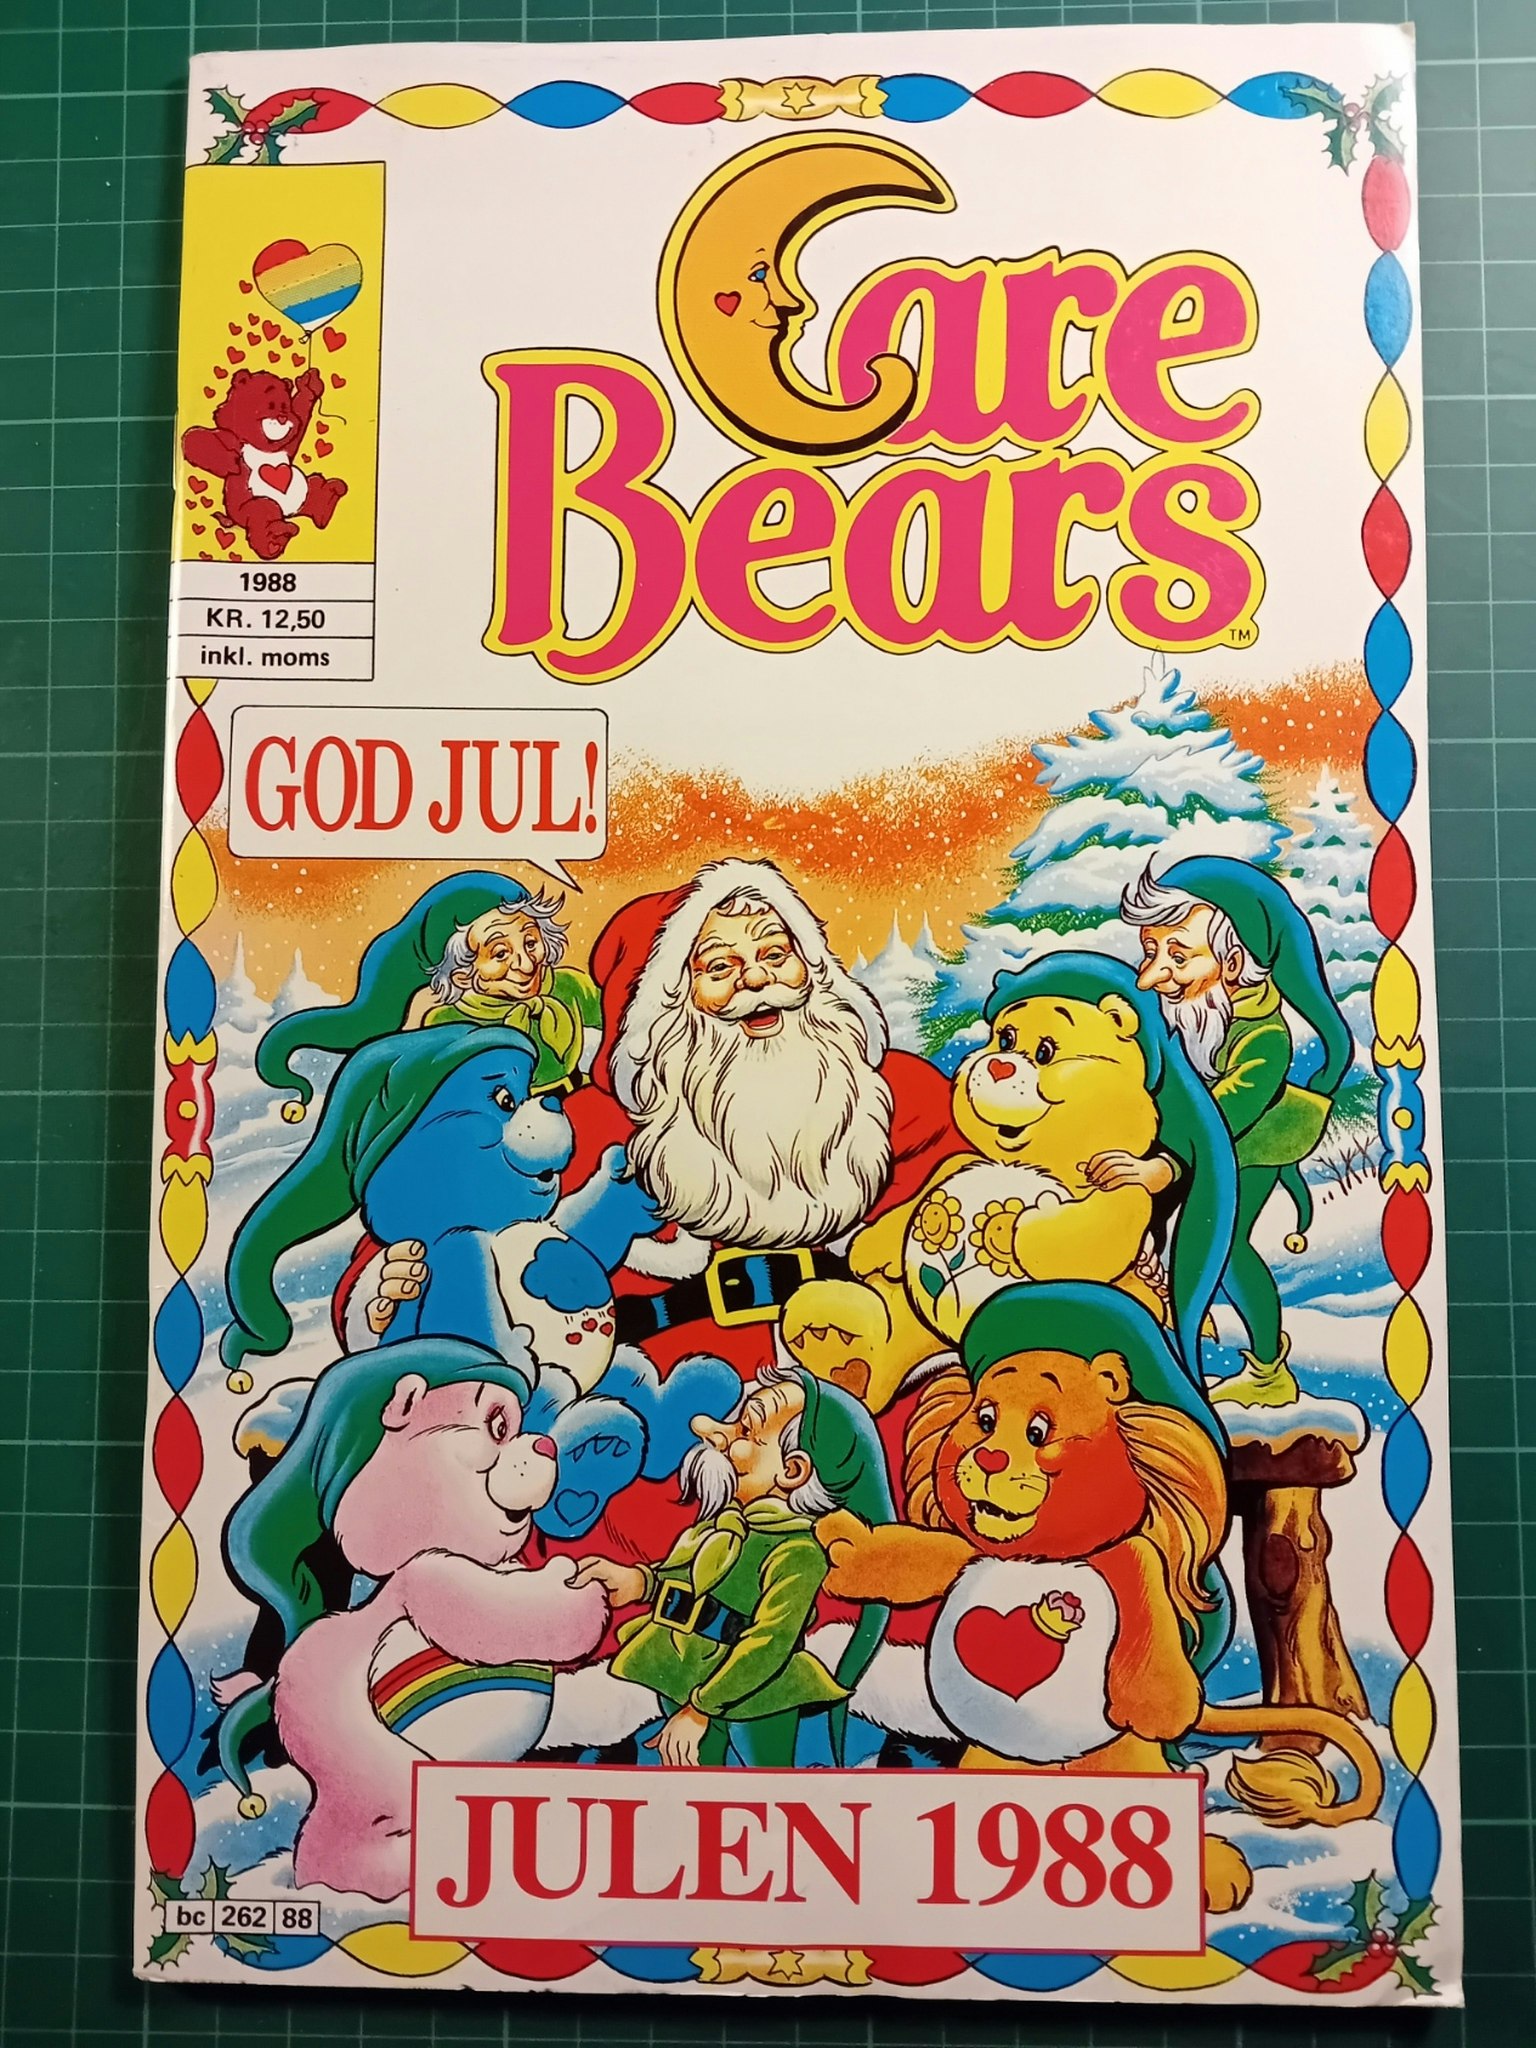 Care Bears julen 1988